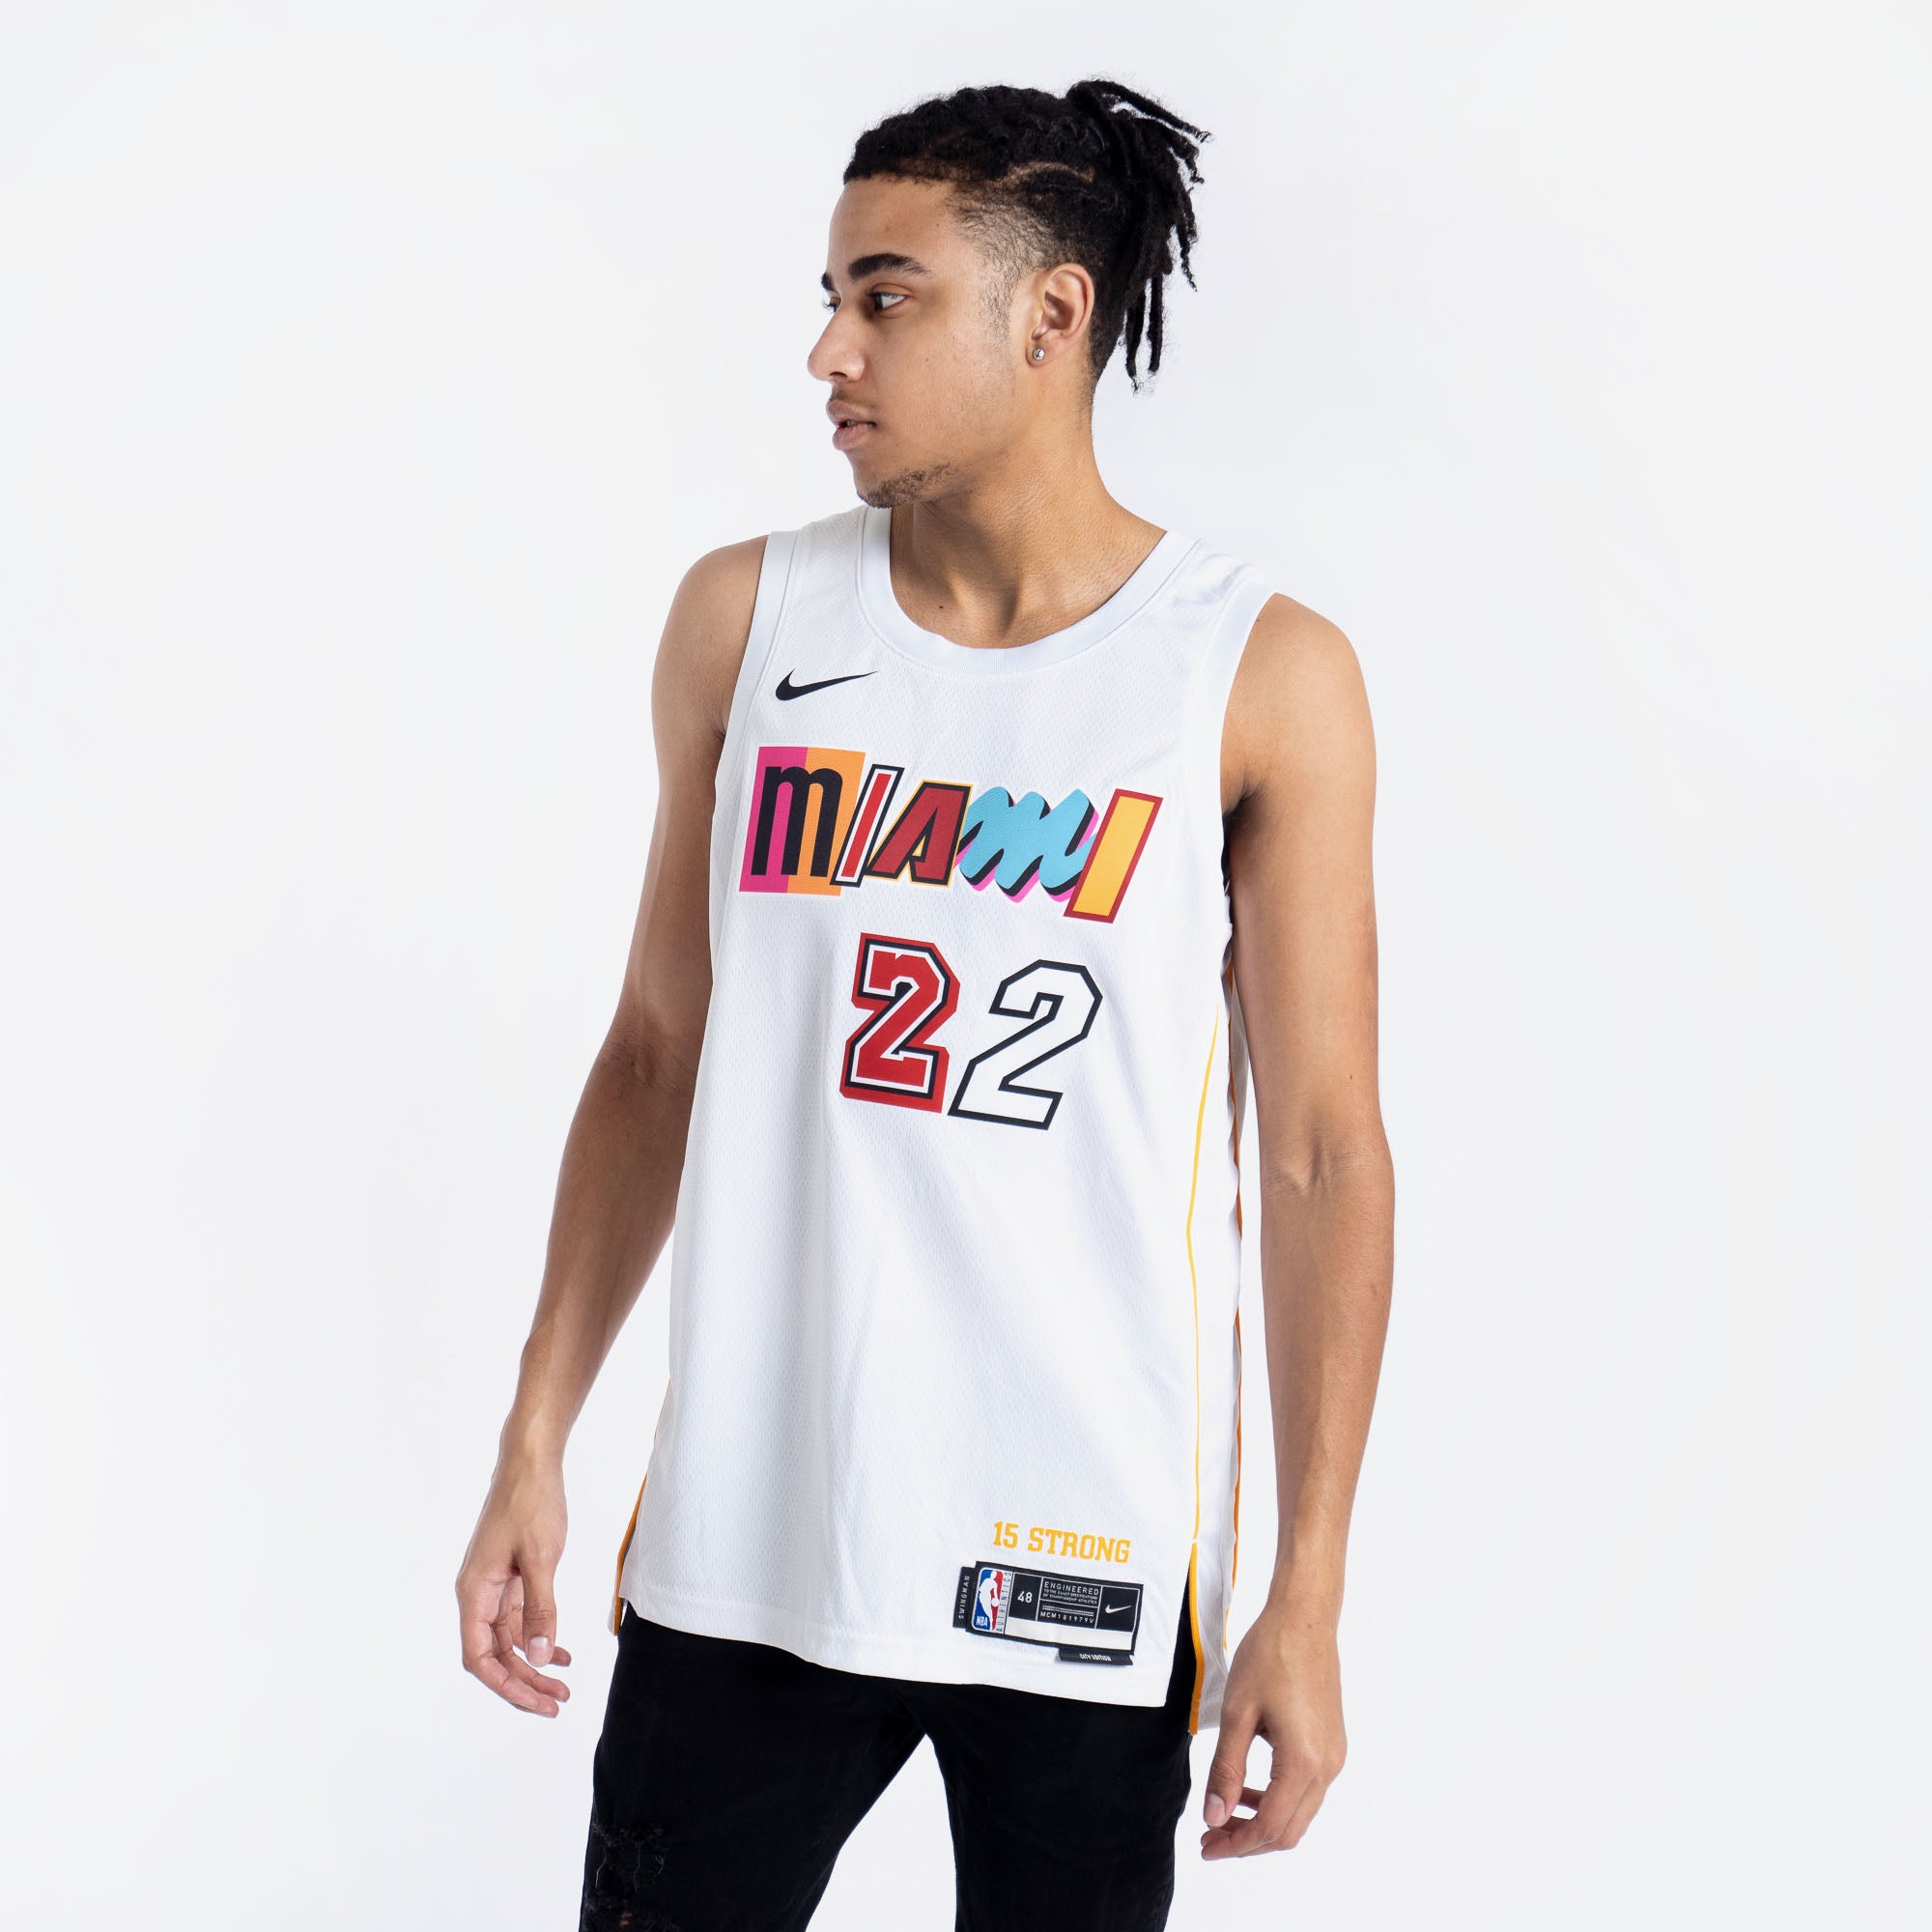 Miami Heat City Edition Men's Nike NBA Long-Sleeve T-Shirt